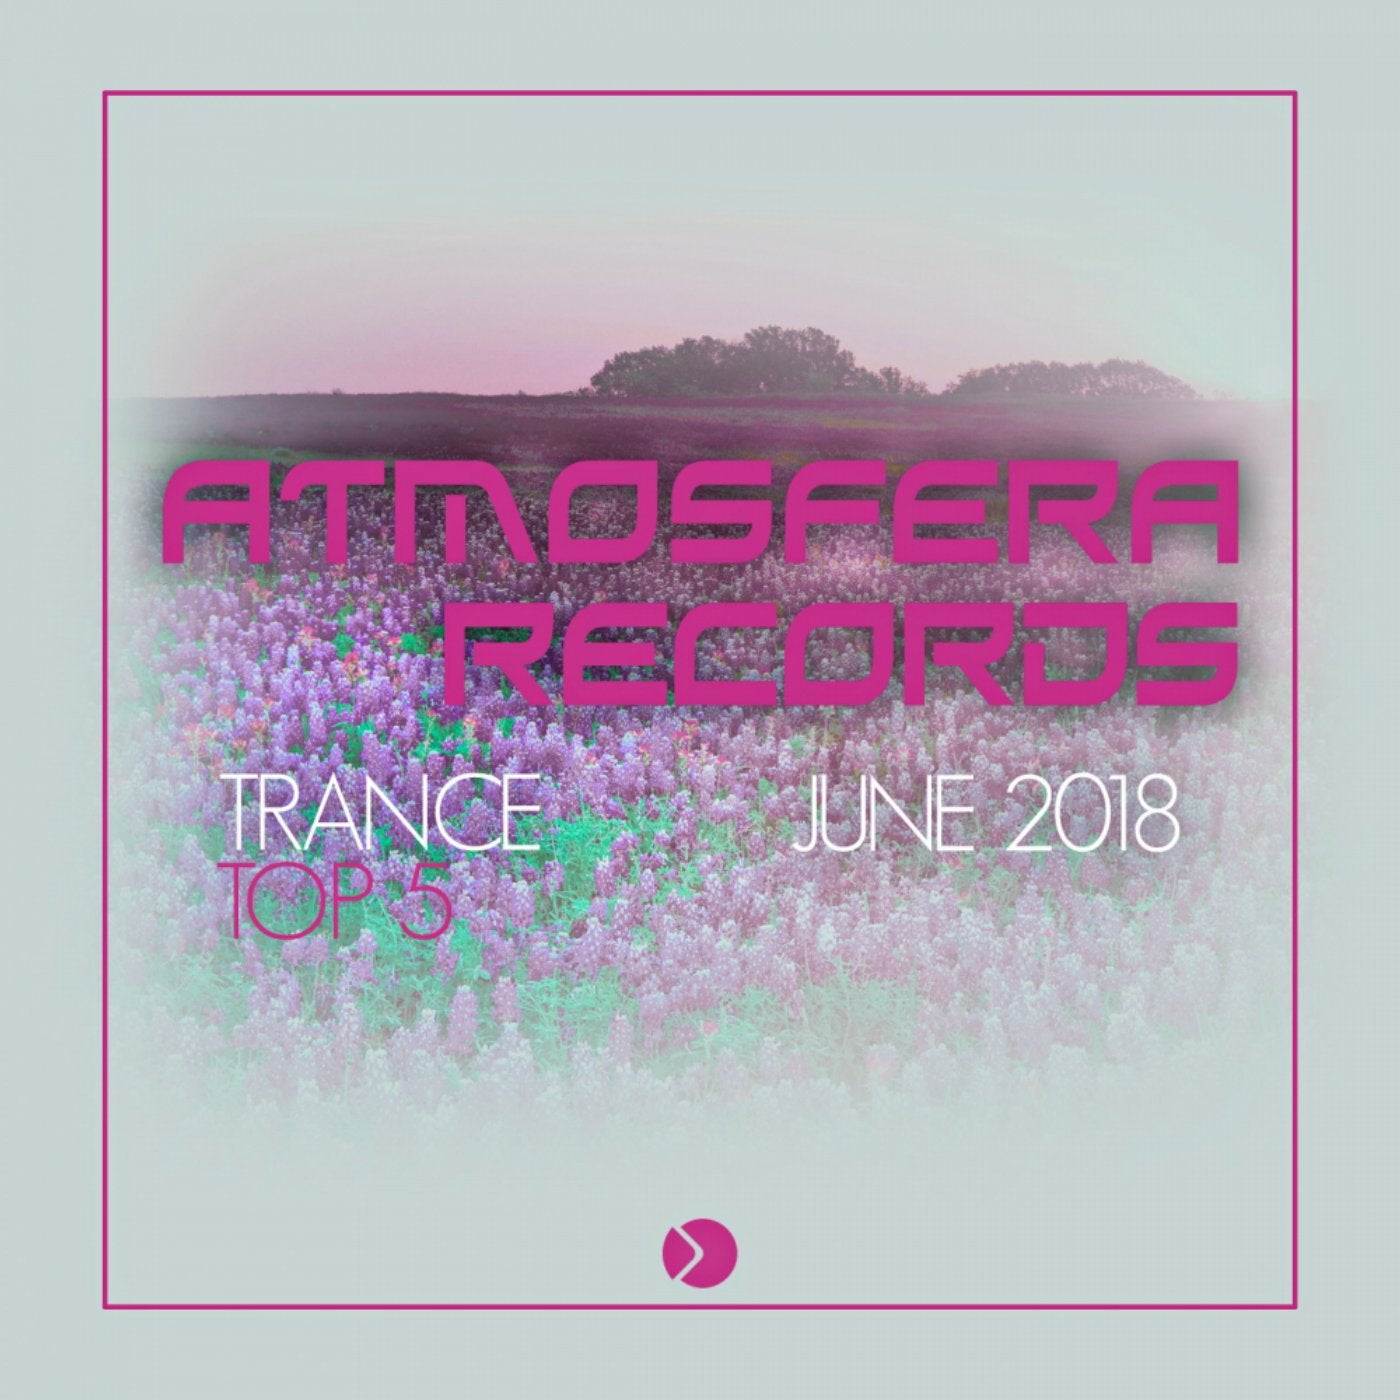 Atmosfera Records: Trance Top 5 June 2018